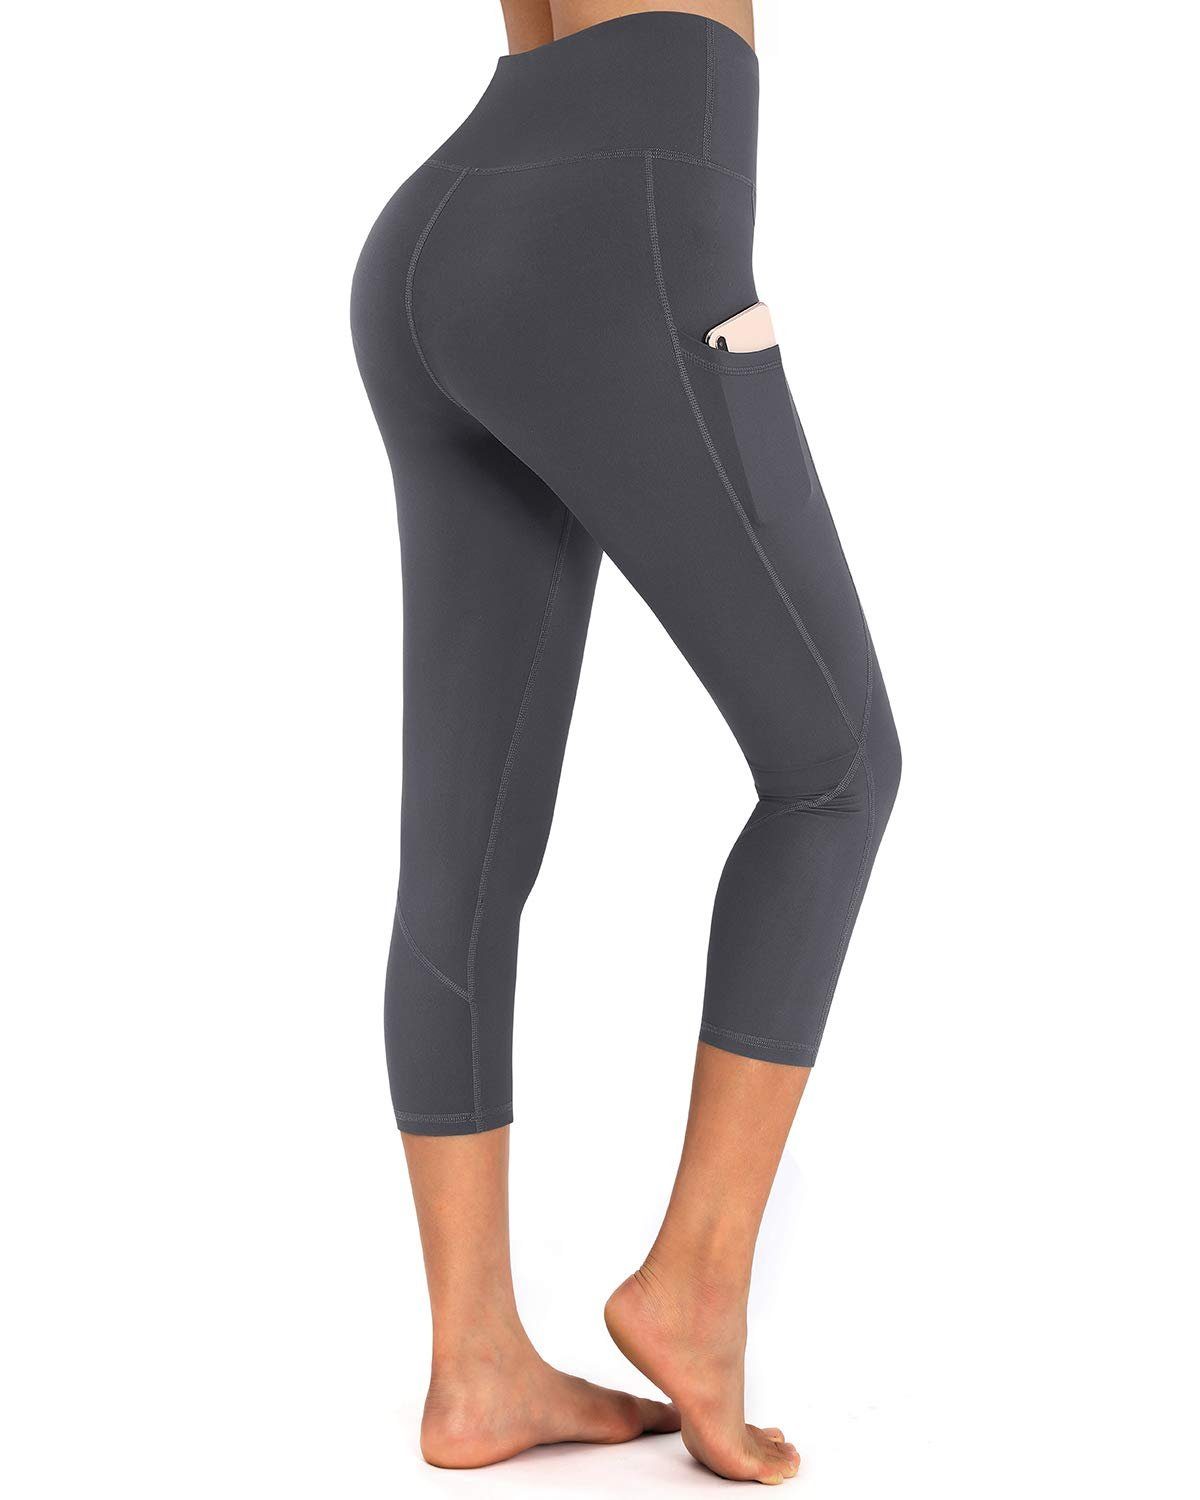 Damen-Yogahose Yogahose G4Free Fitness-Laufleggings Taille mit hoher Taschen, Grau